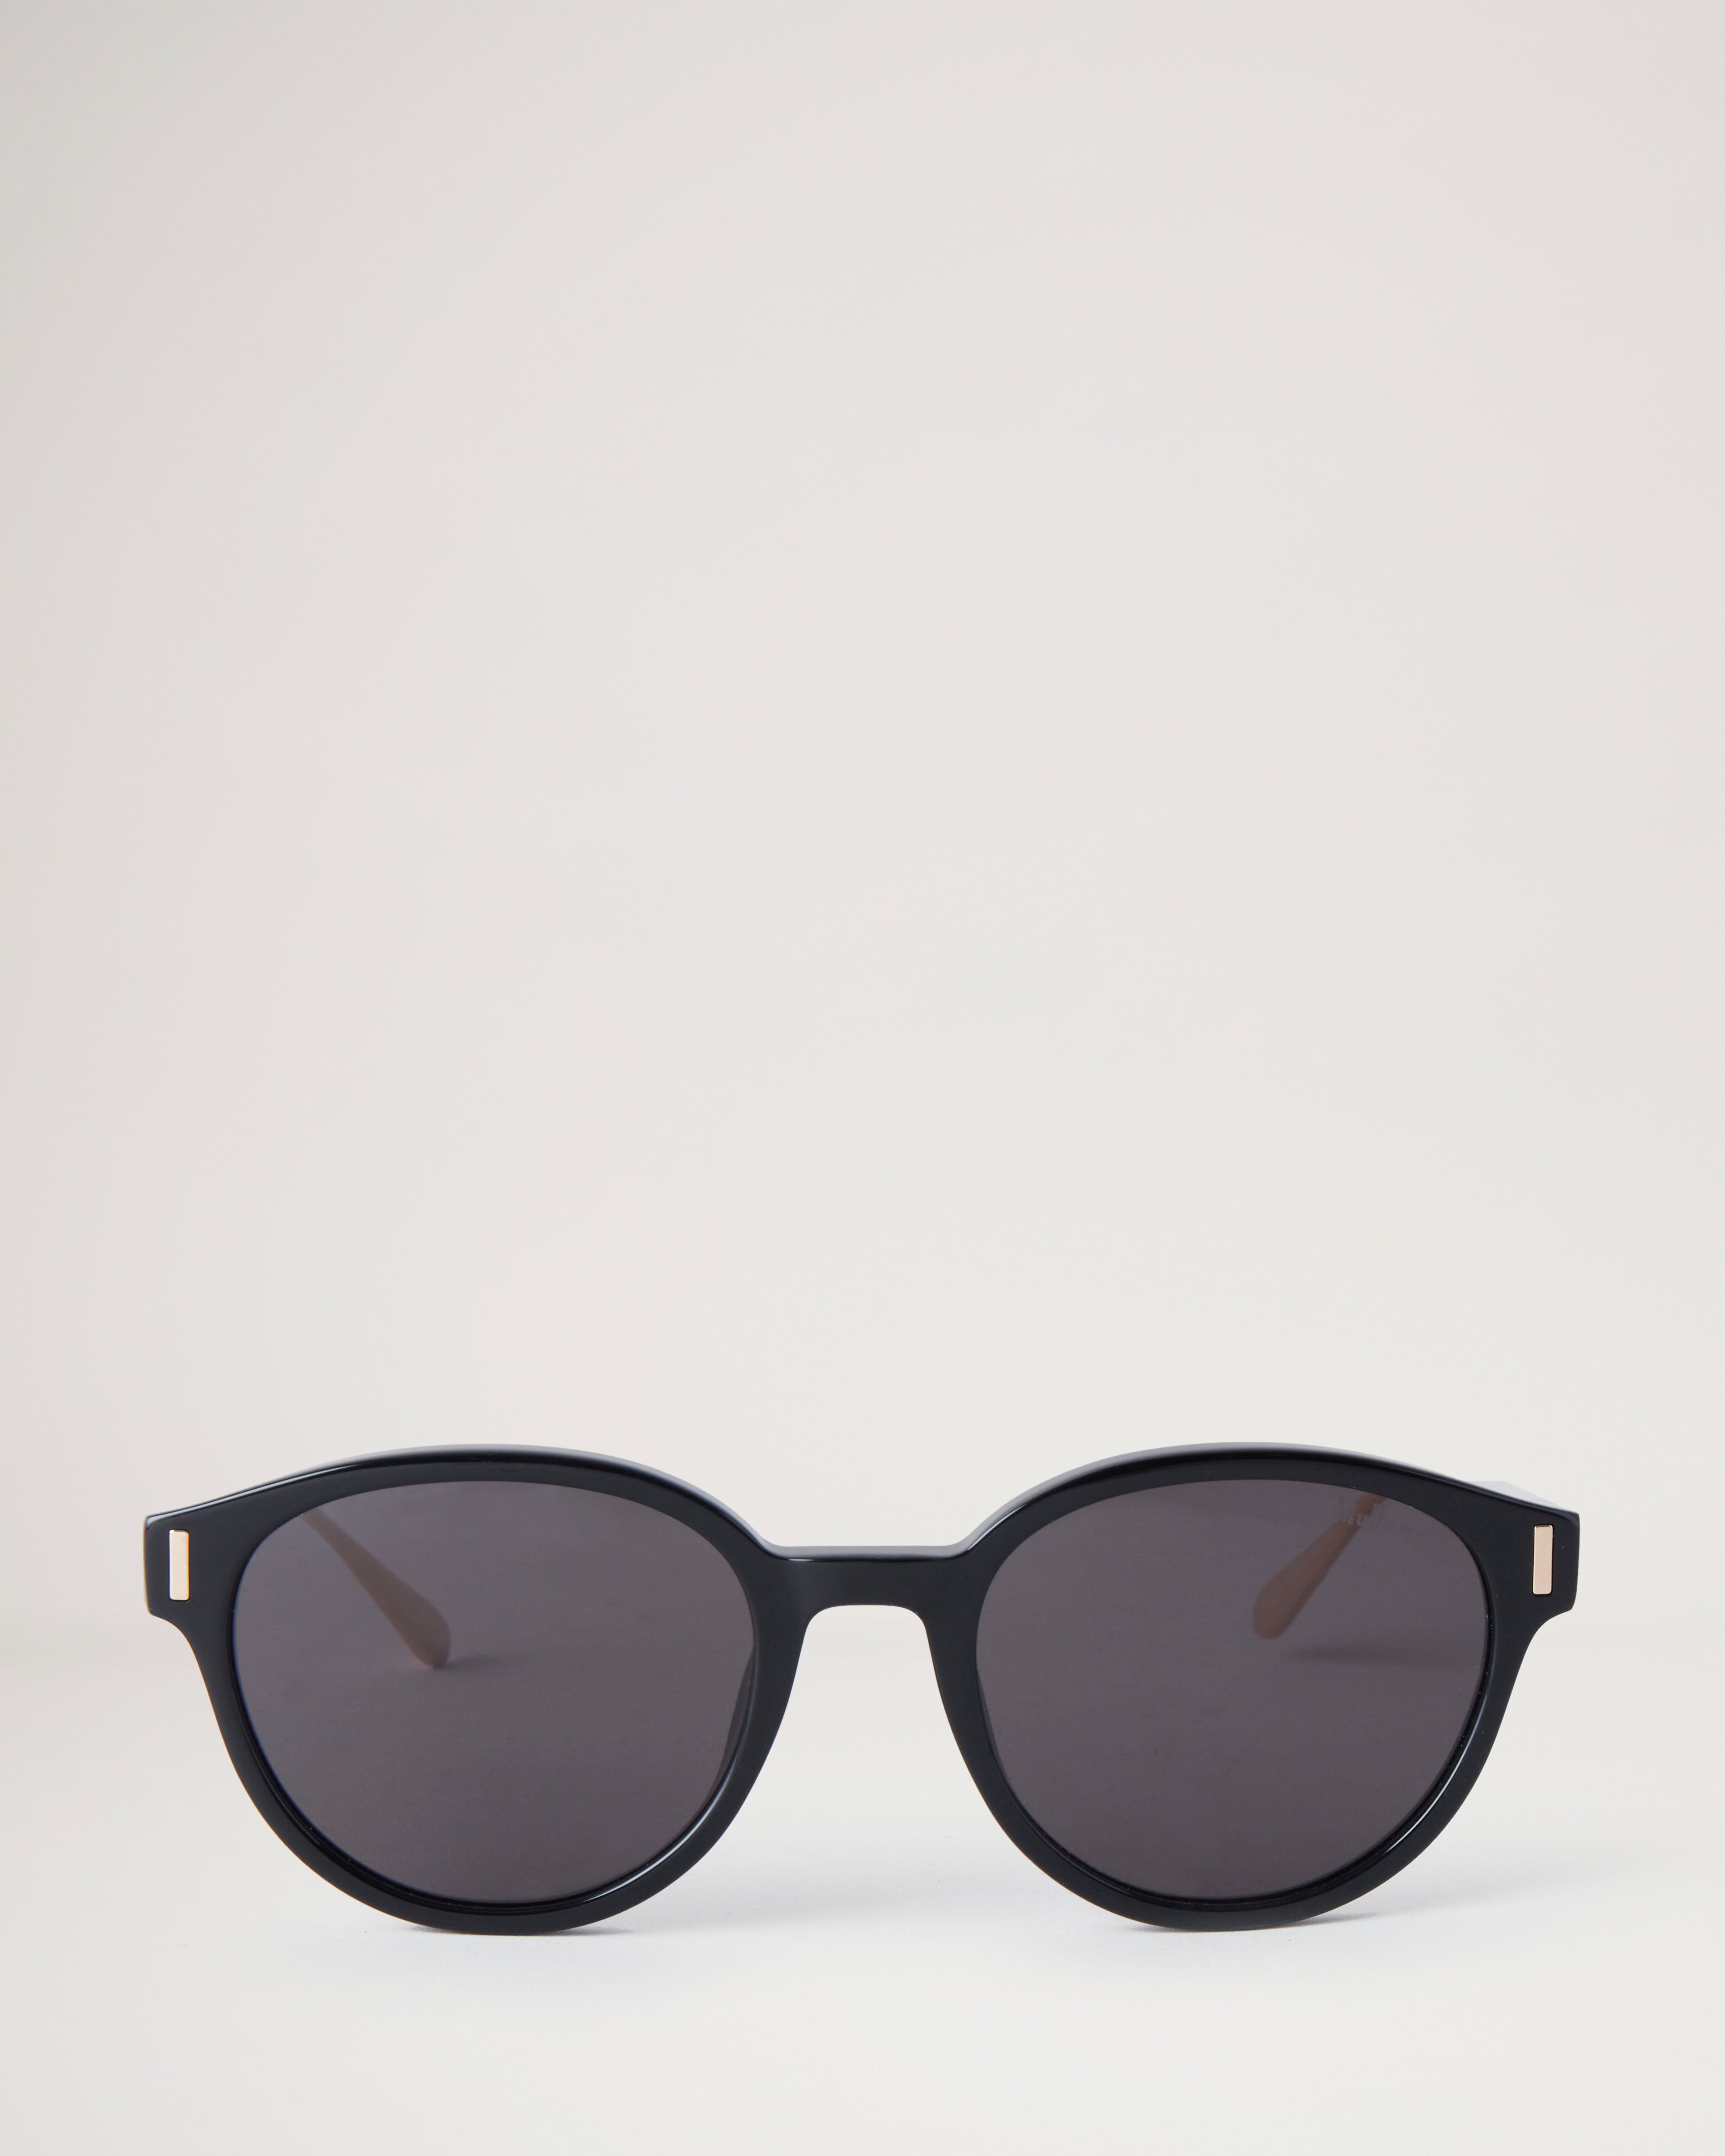 Mulberry Taylor Sunglasses - Black